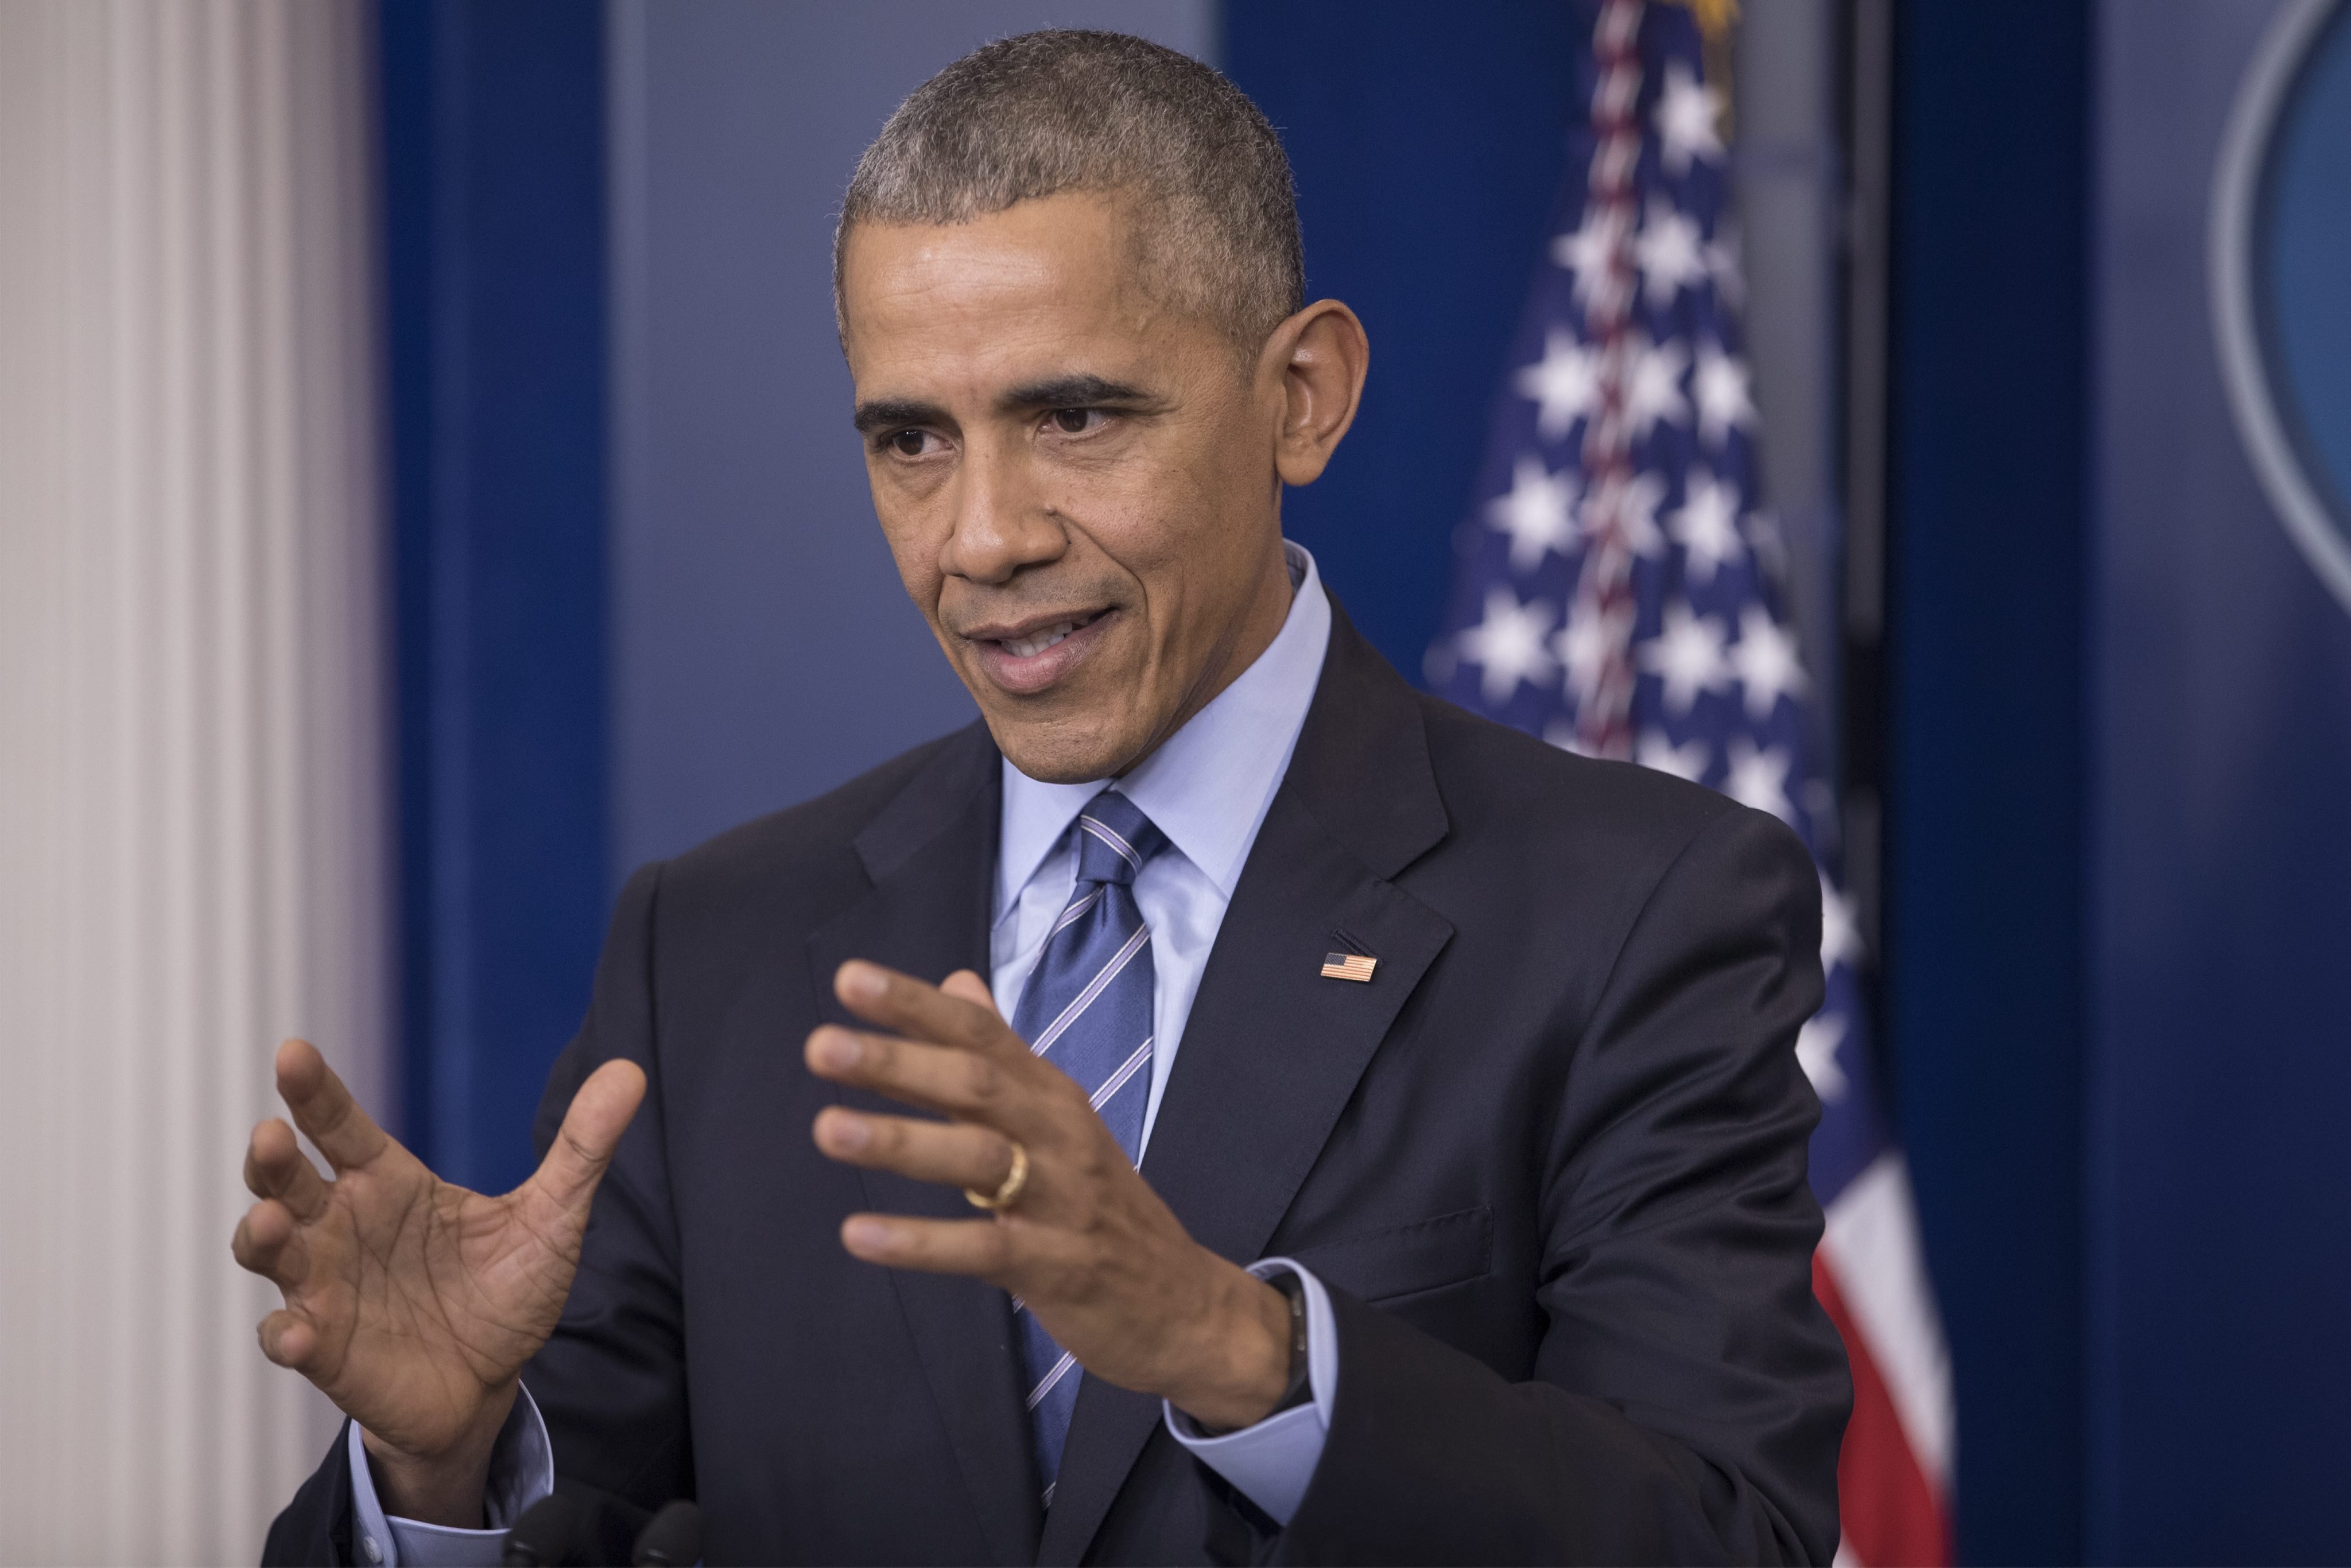 Obama cancel·la la seva macrofesta per la covid en el seu 60 aniversari